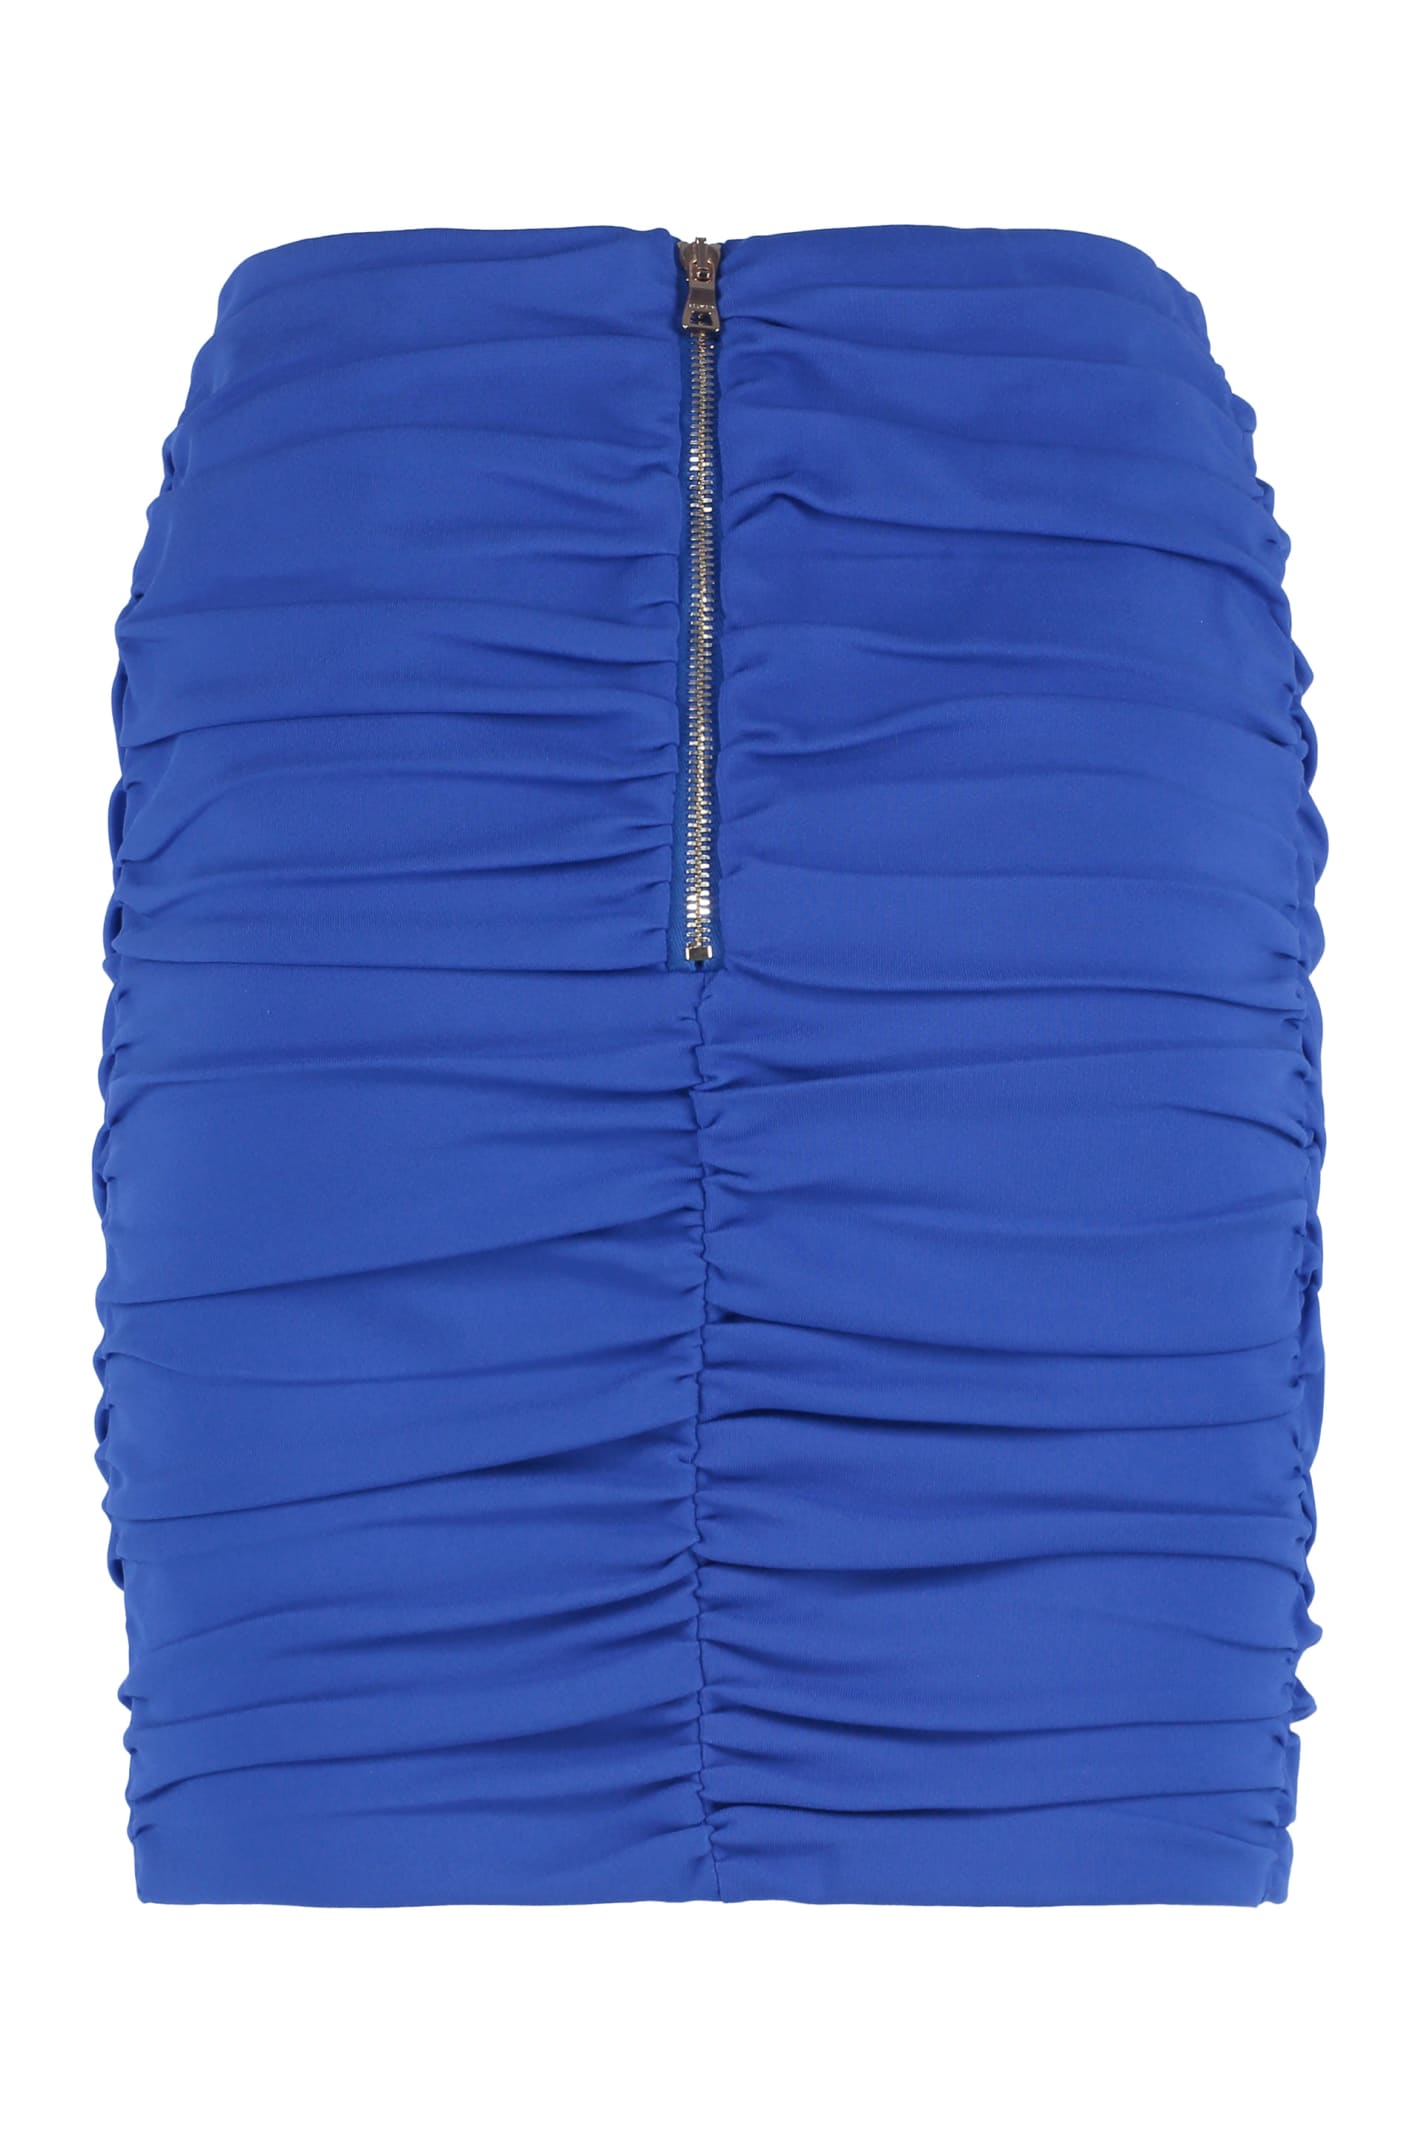 Shop Balmain Draped Skirt In Blue